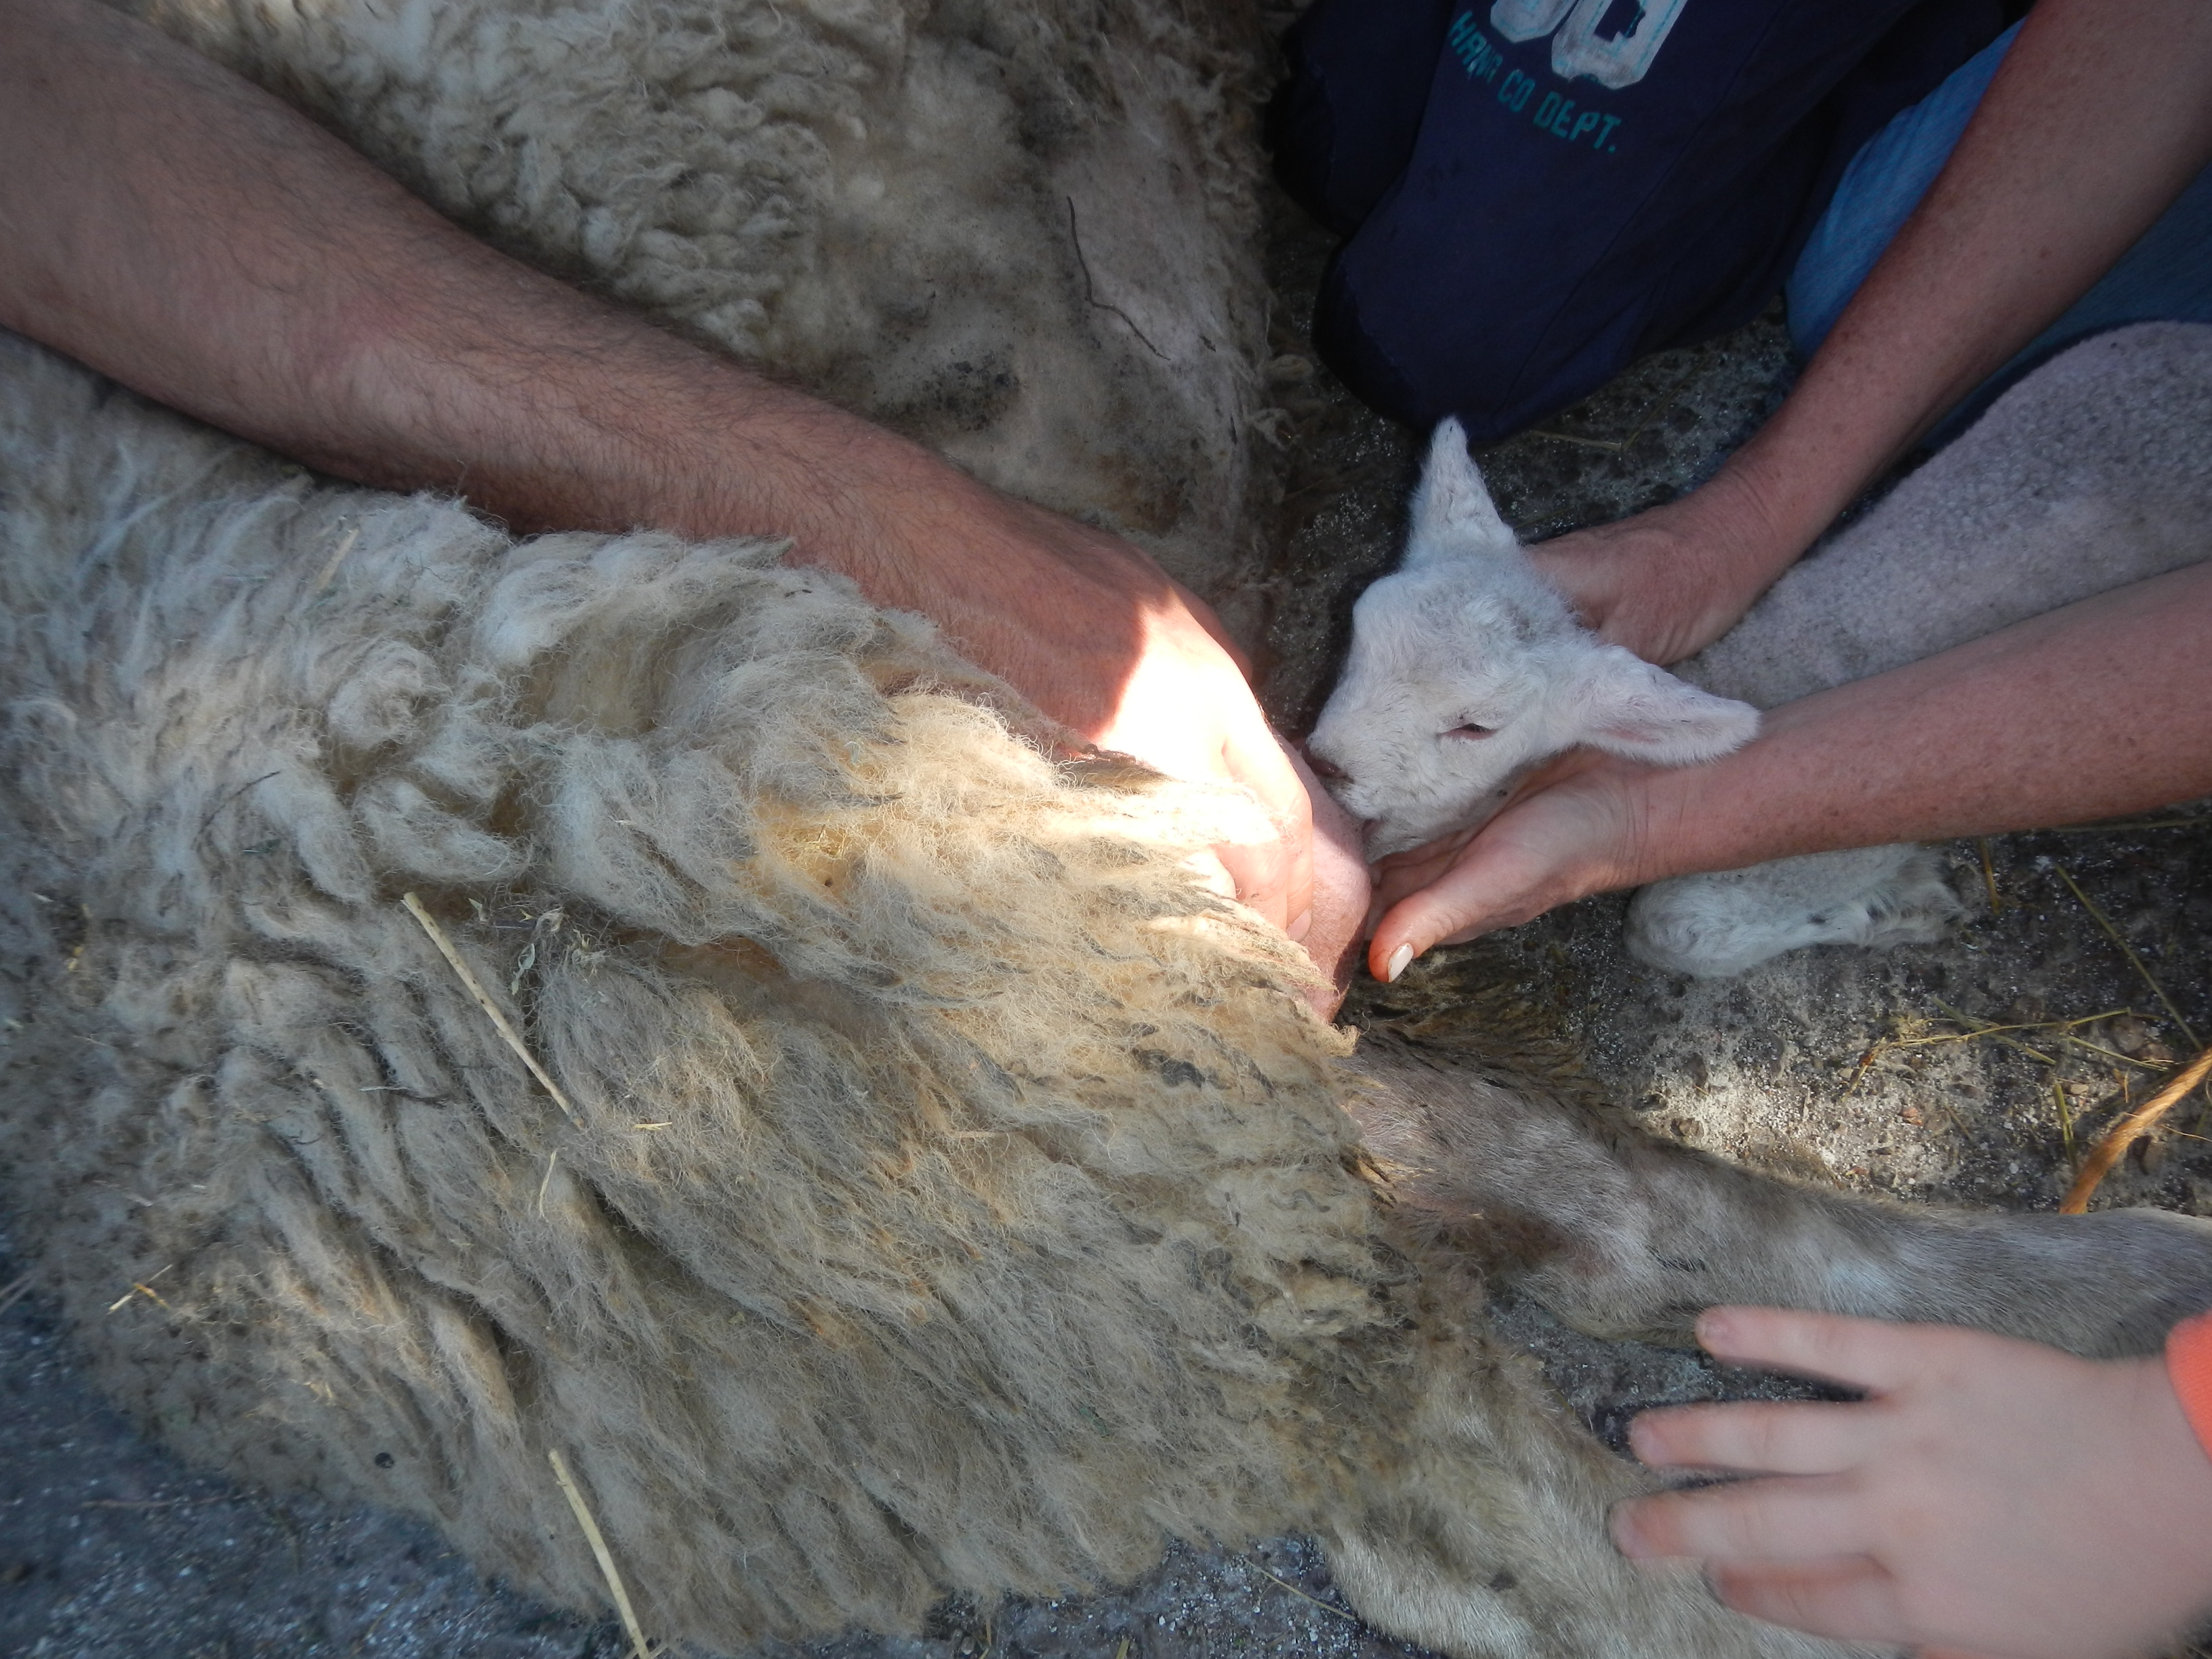 20140807 Fazenda Ovelhas ovinocultura cria nova mamando c ajuda 001.jpg